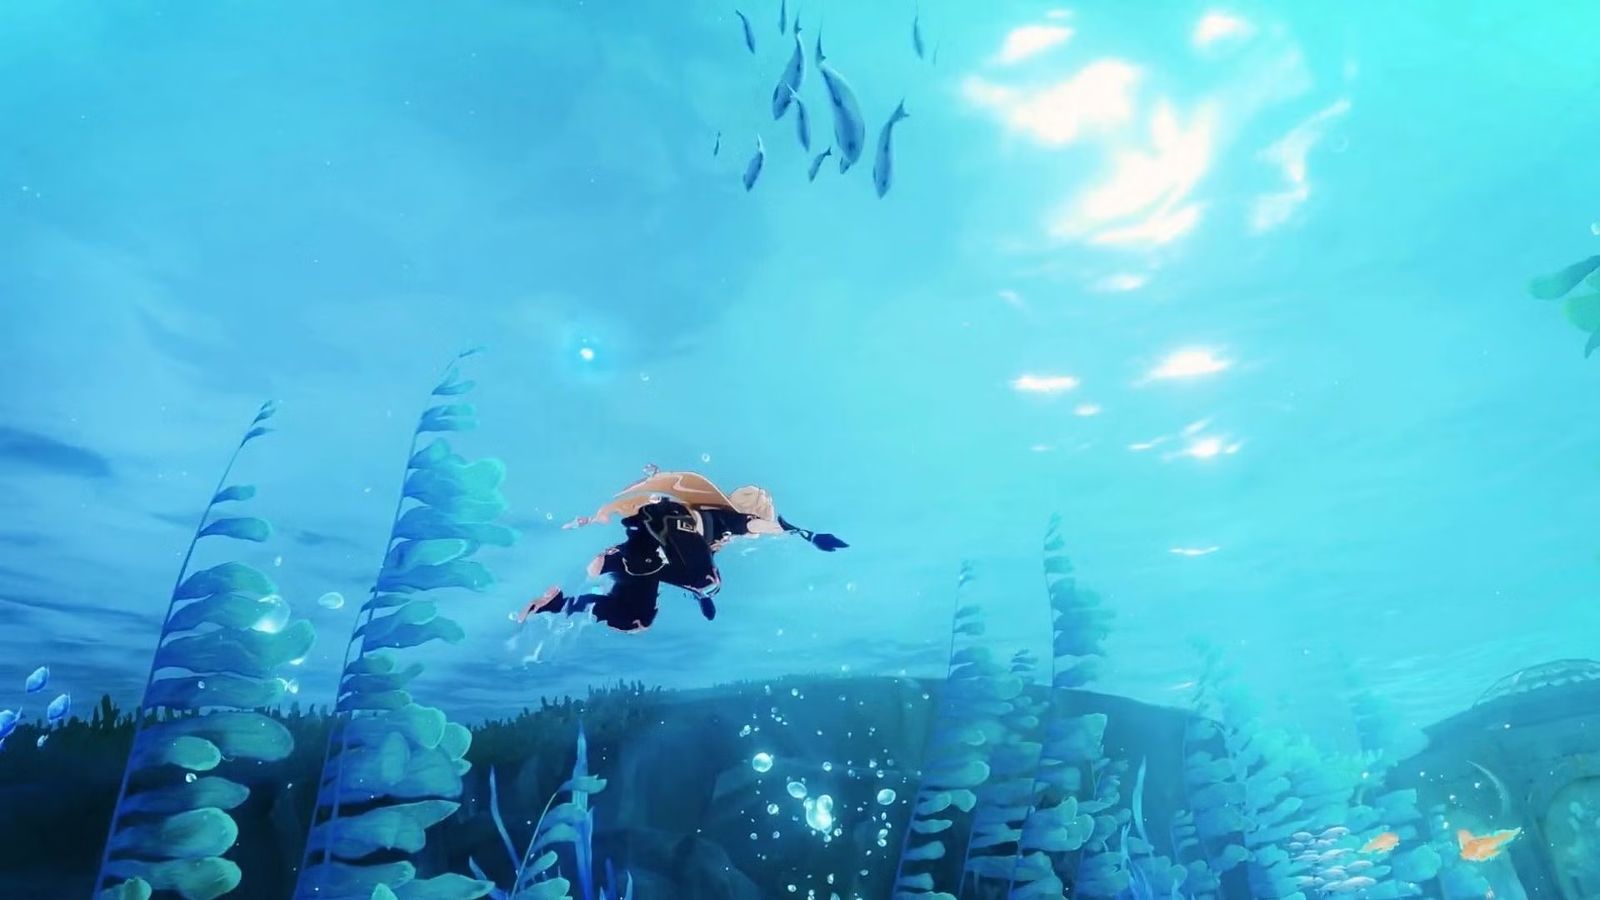 The player character swimming underwater in Genshin Impact.